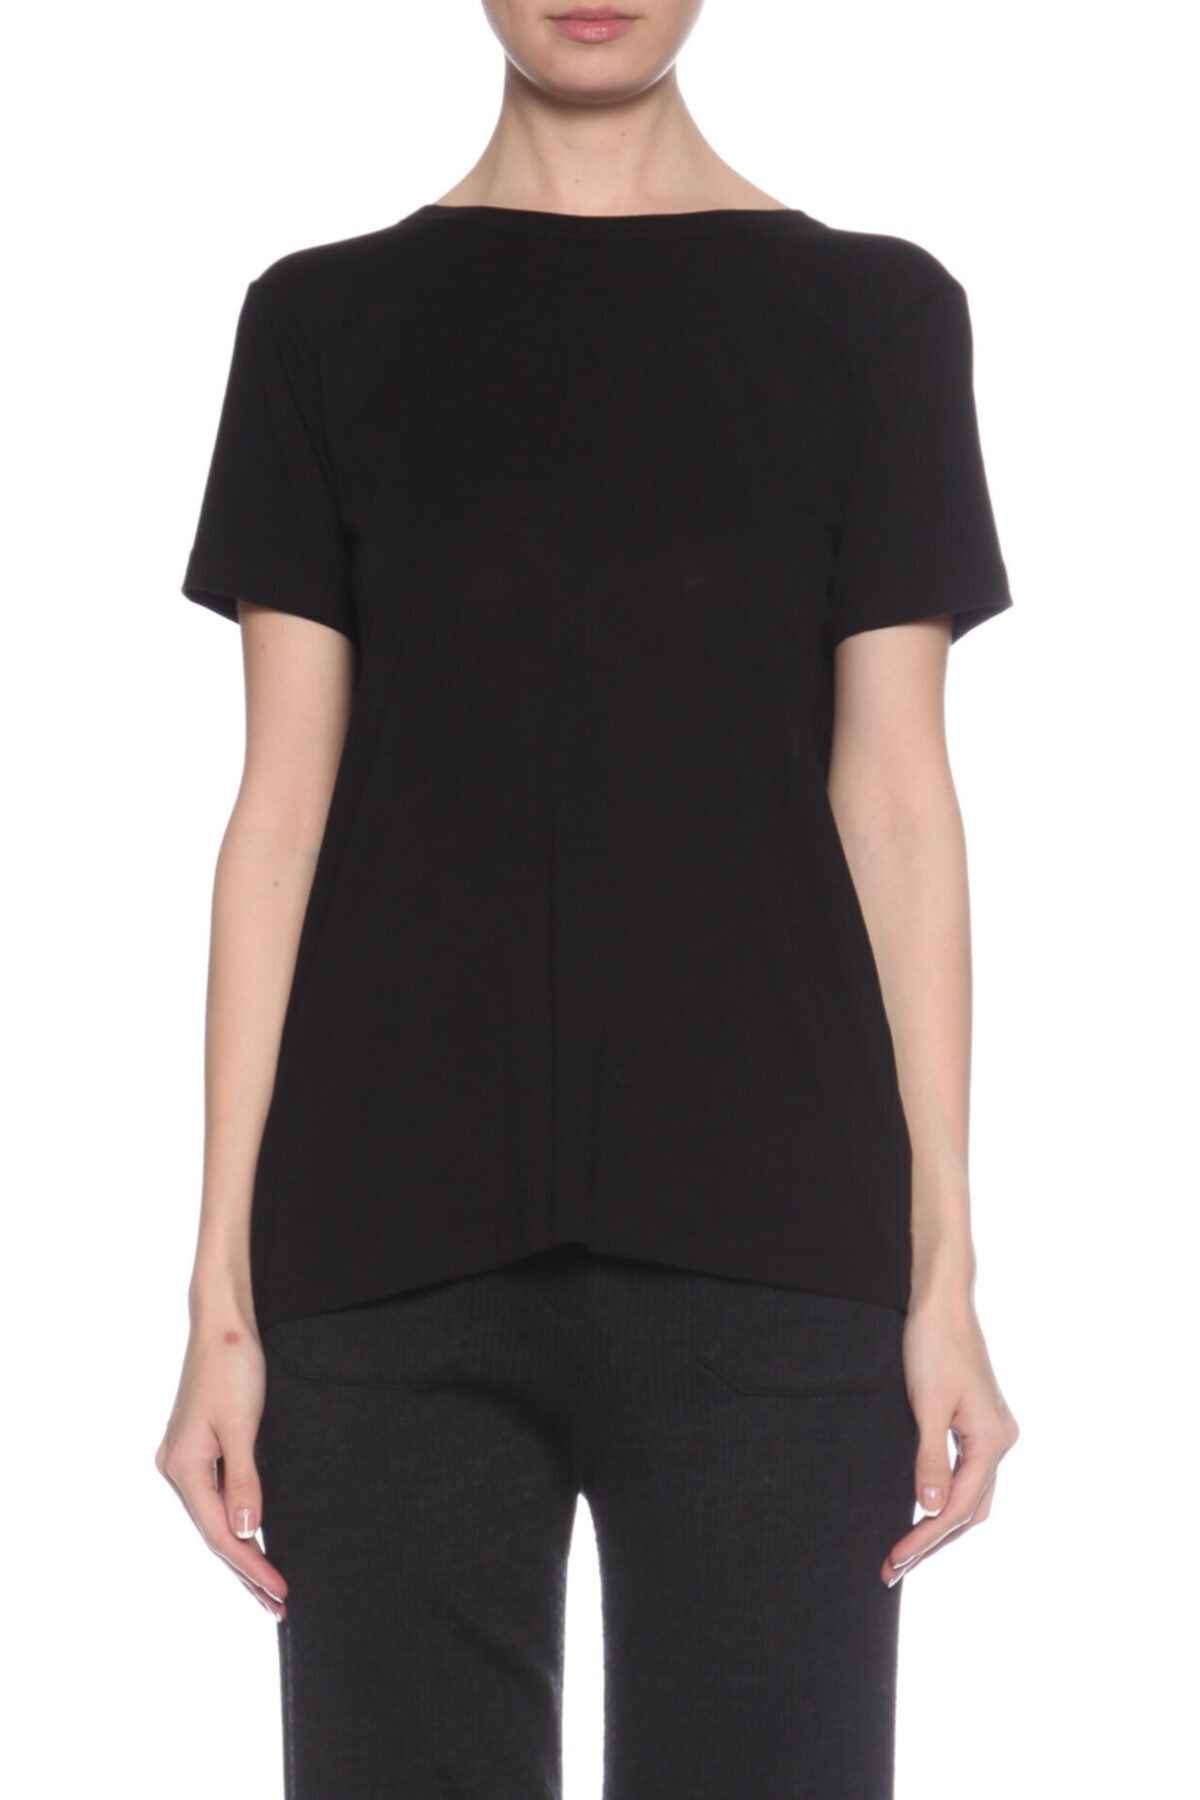 Helmut Lang Kadın Siyah Sıfır Yaka T-shirt